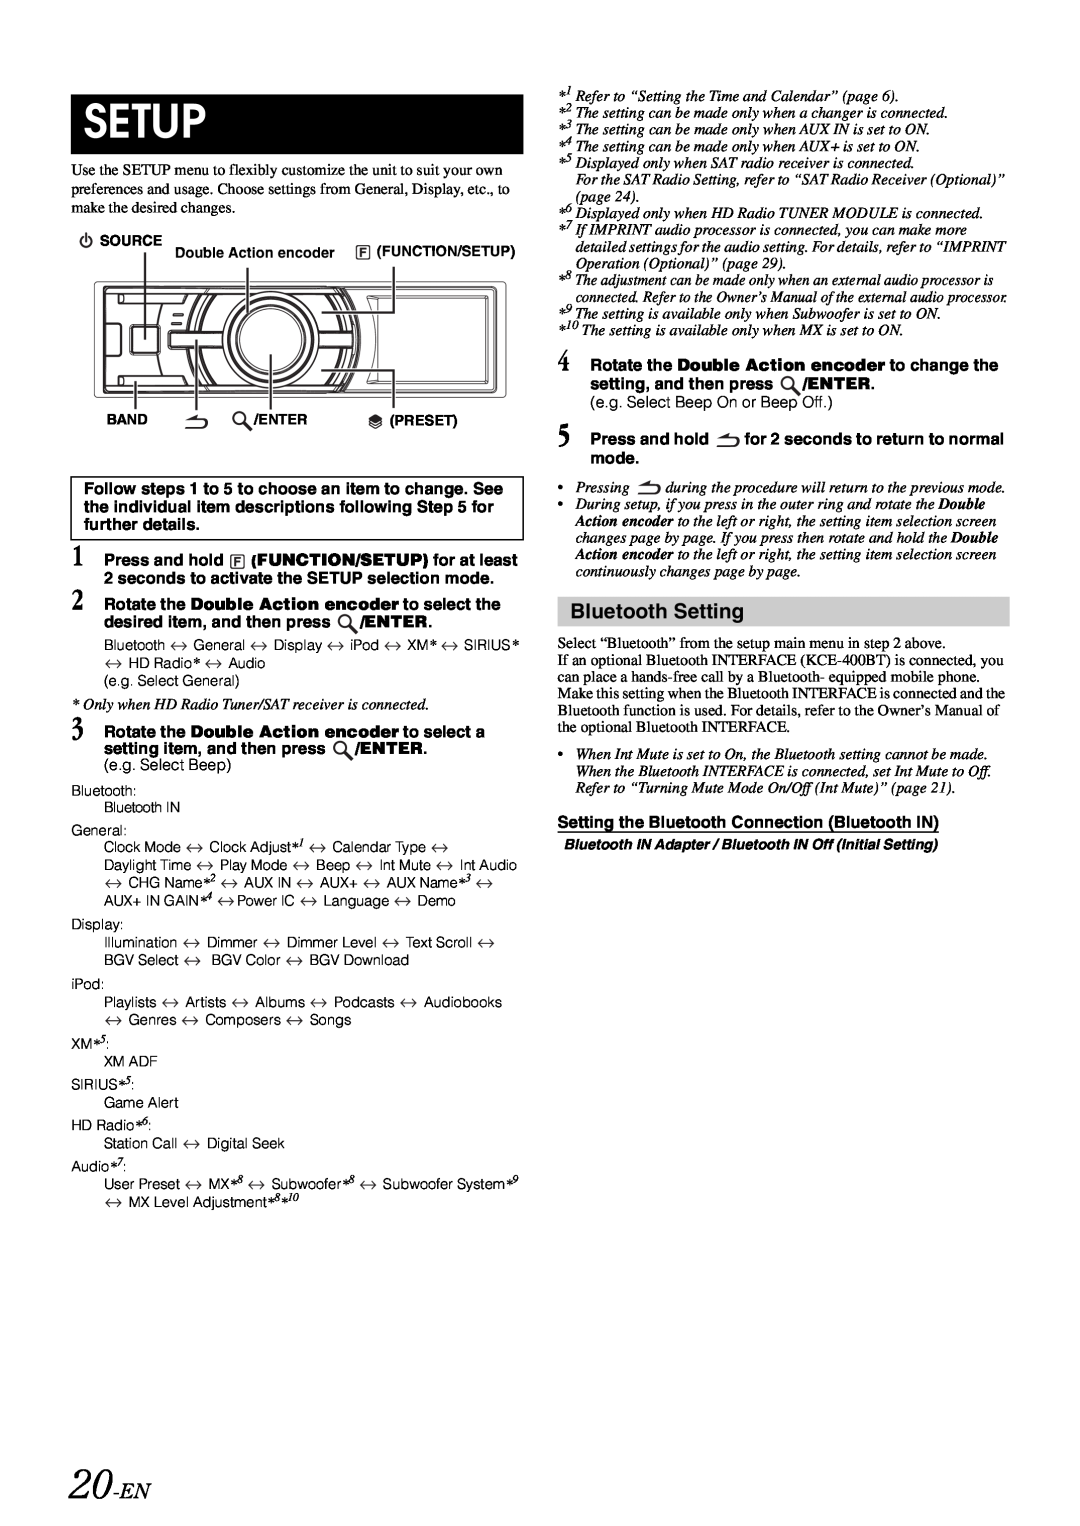 Alpine iDA-305 owner manual Setup, 20-EN, Bluetooth Setting 